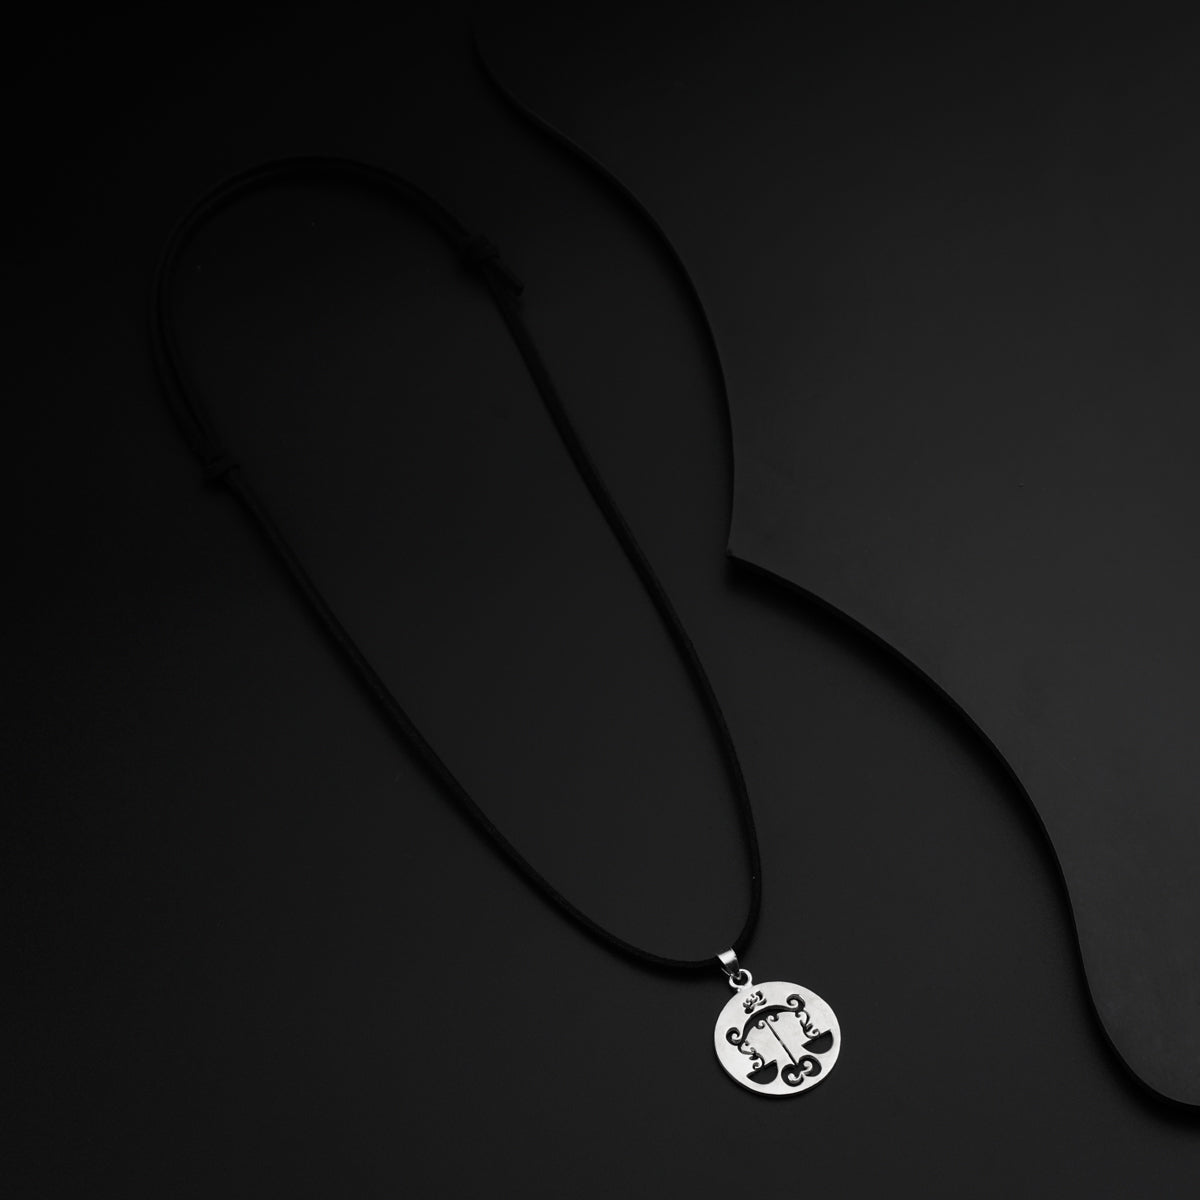 Libra / तूळ Silver Pendant Necklace